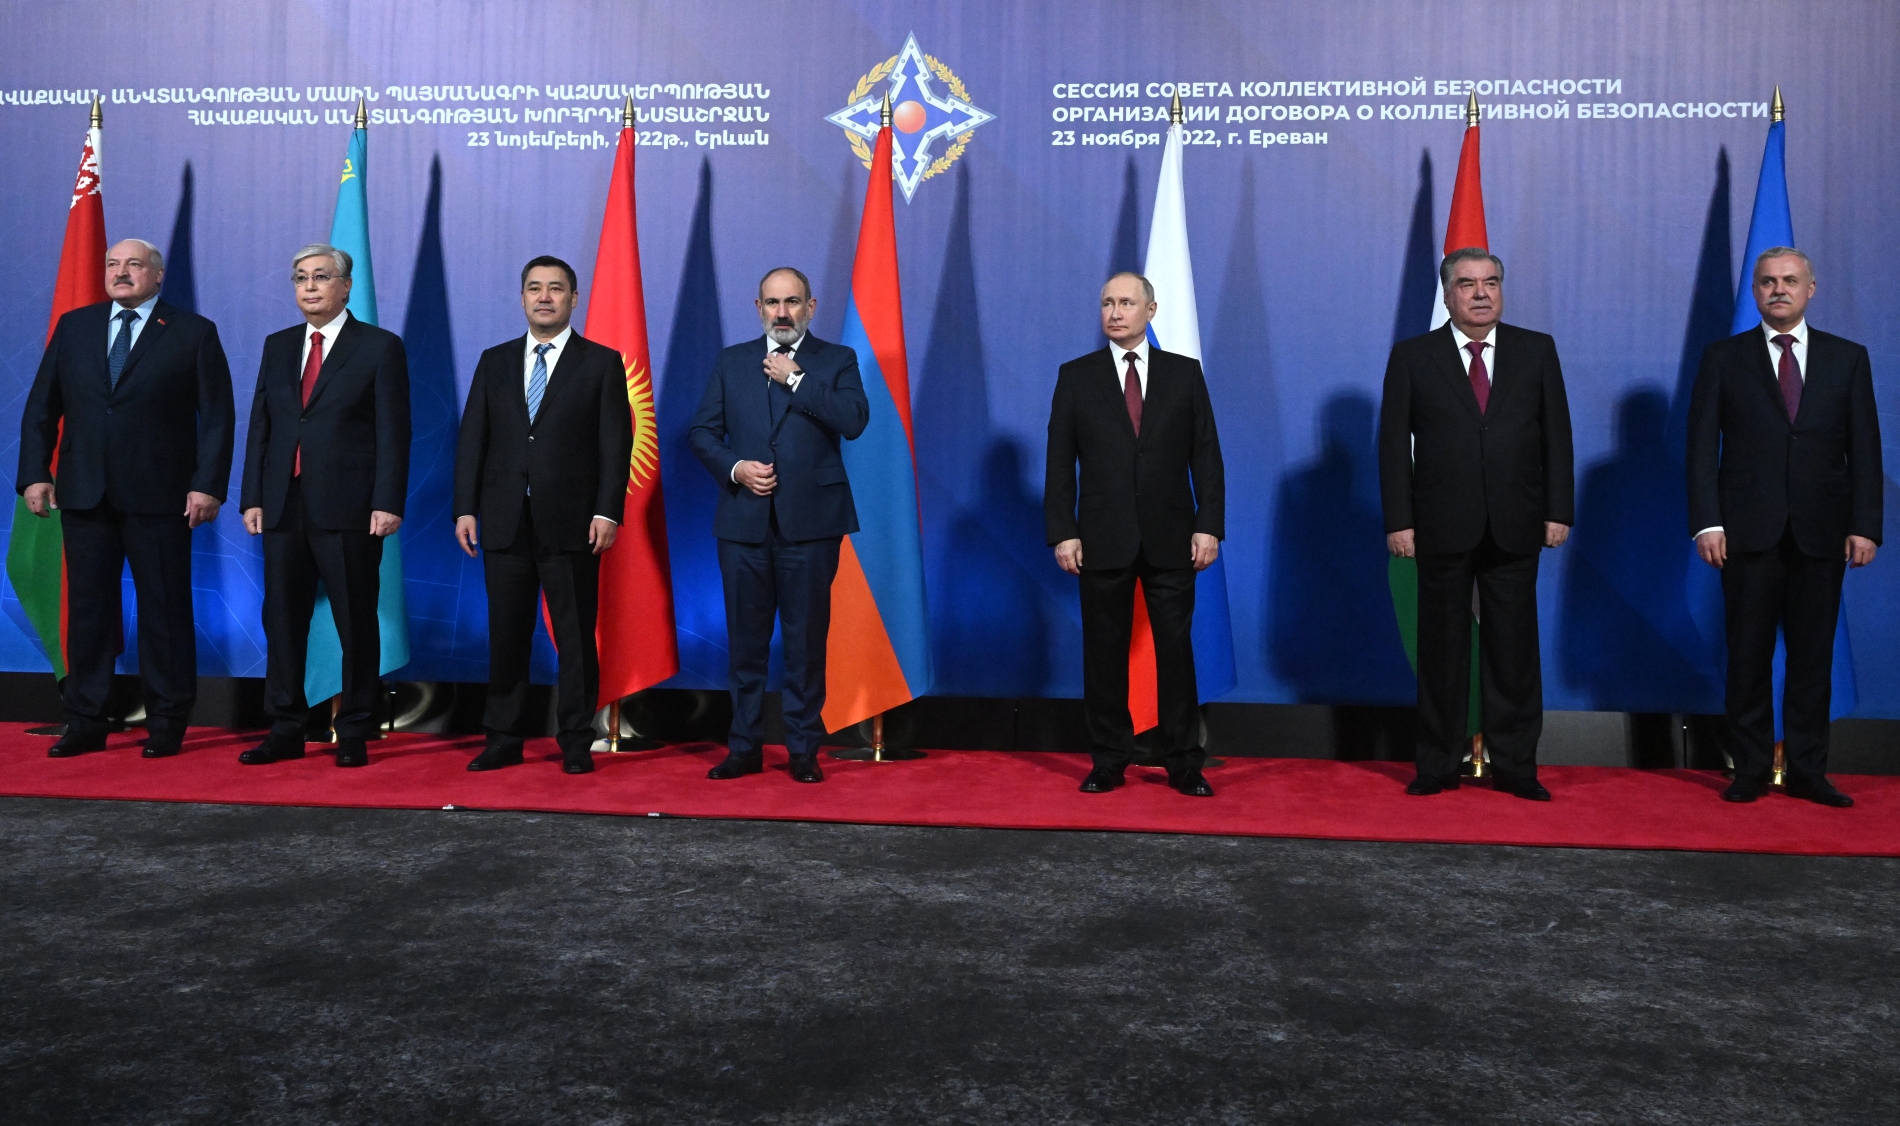 Владимир Путин и Александр Лукашенко принимают участие в саммите ОДКБ в Ереване